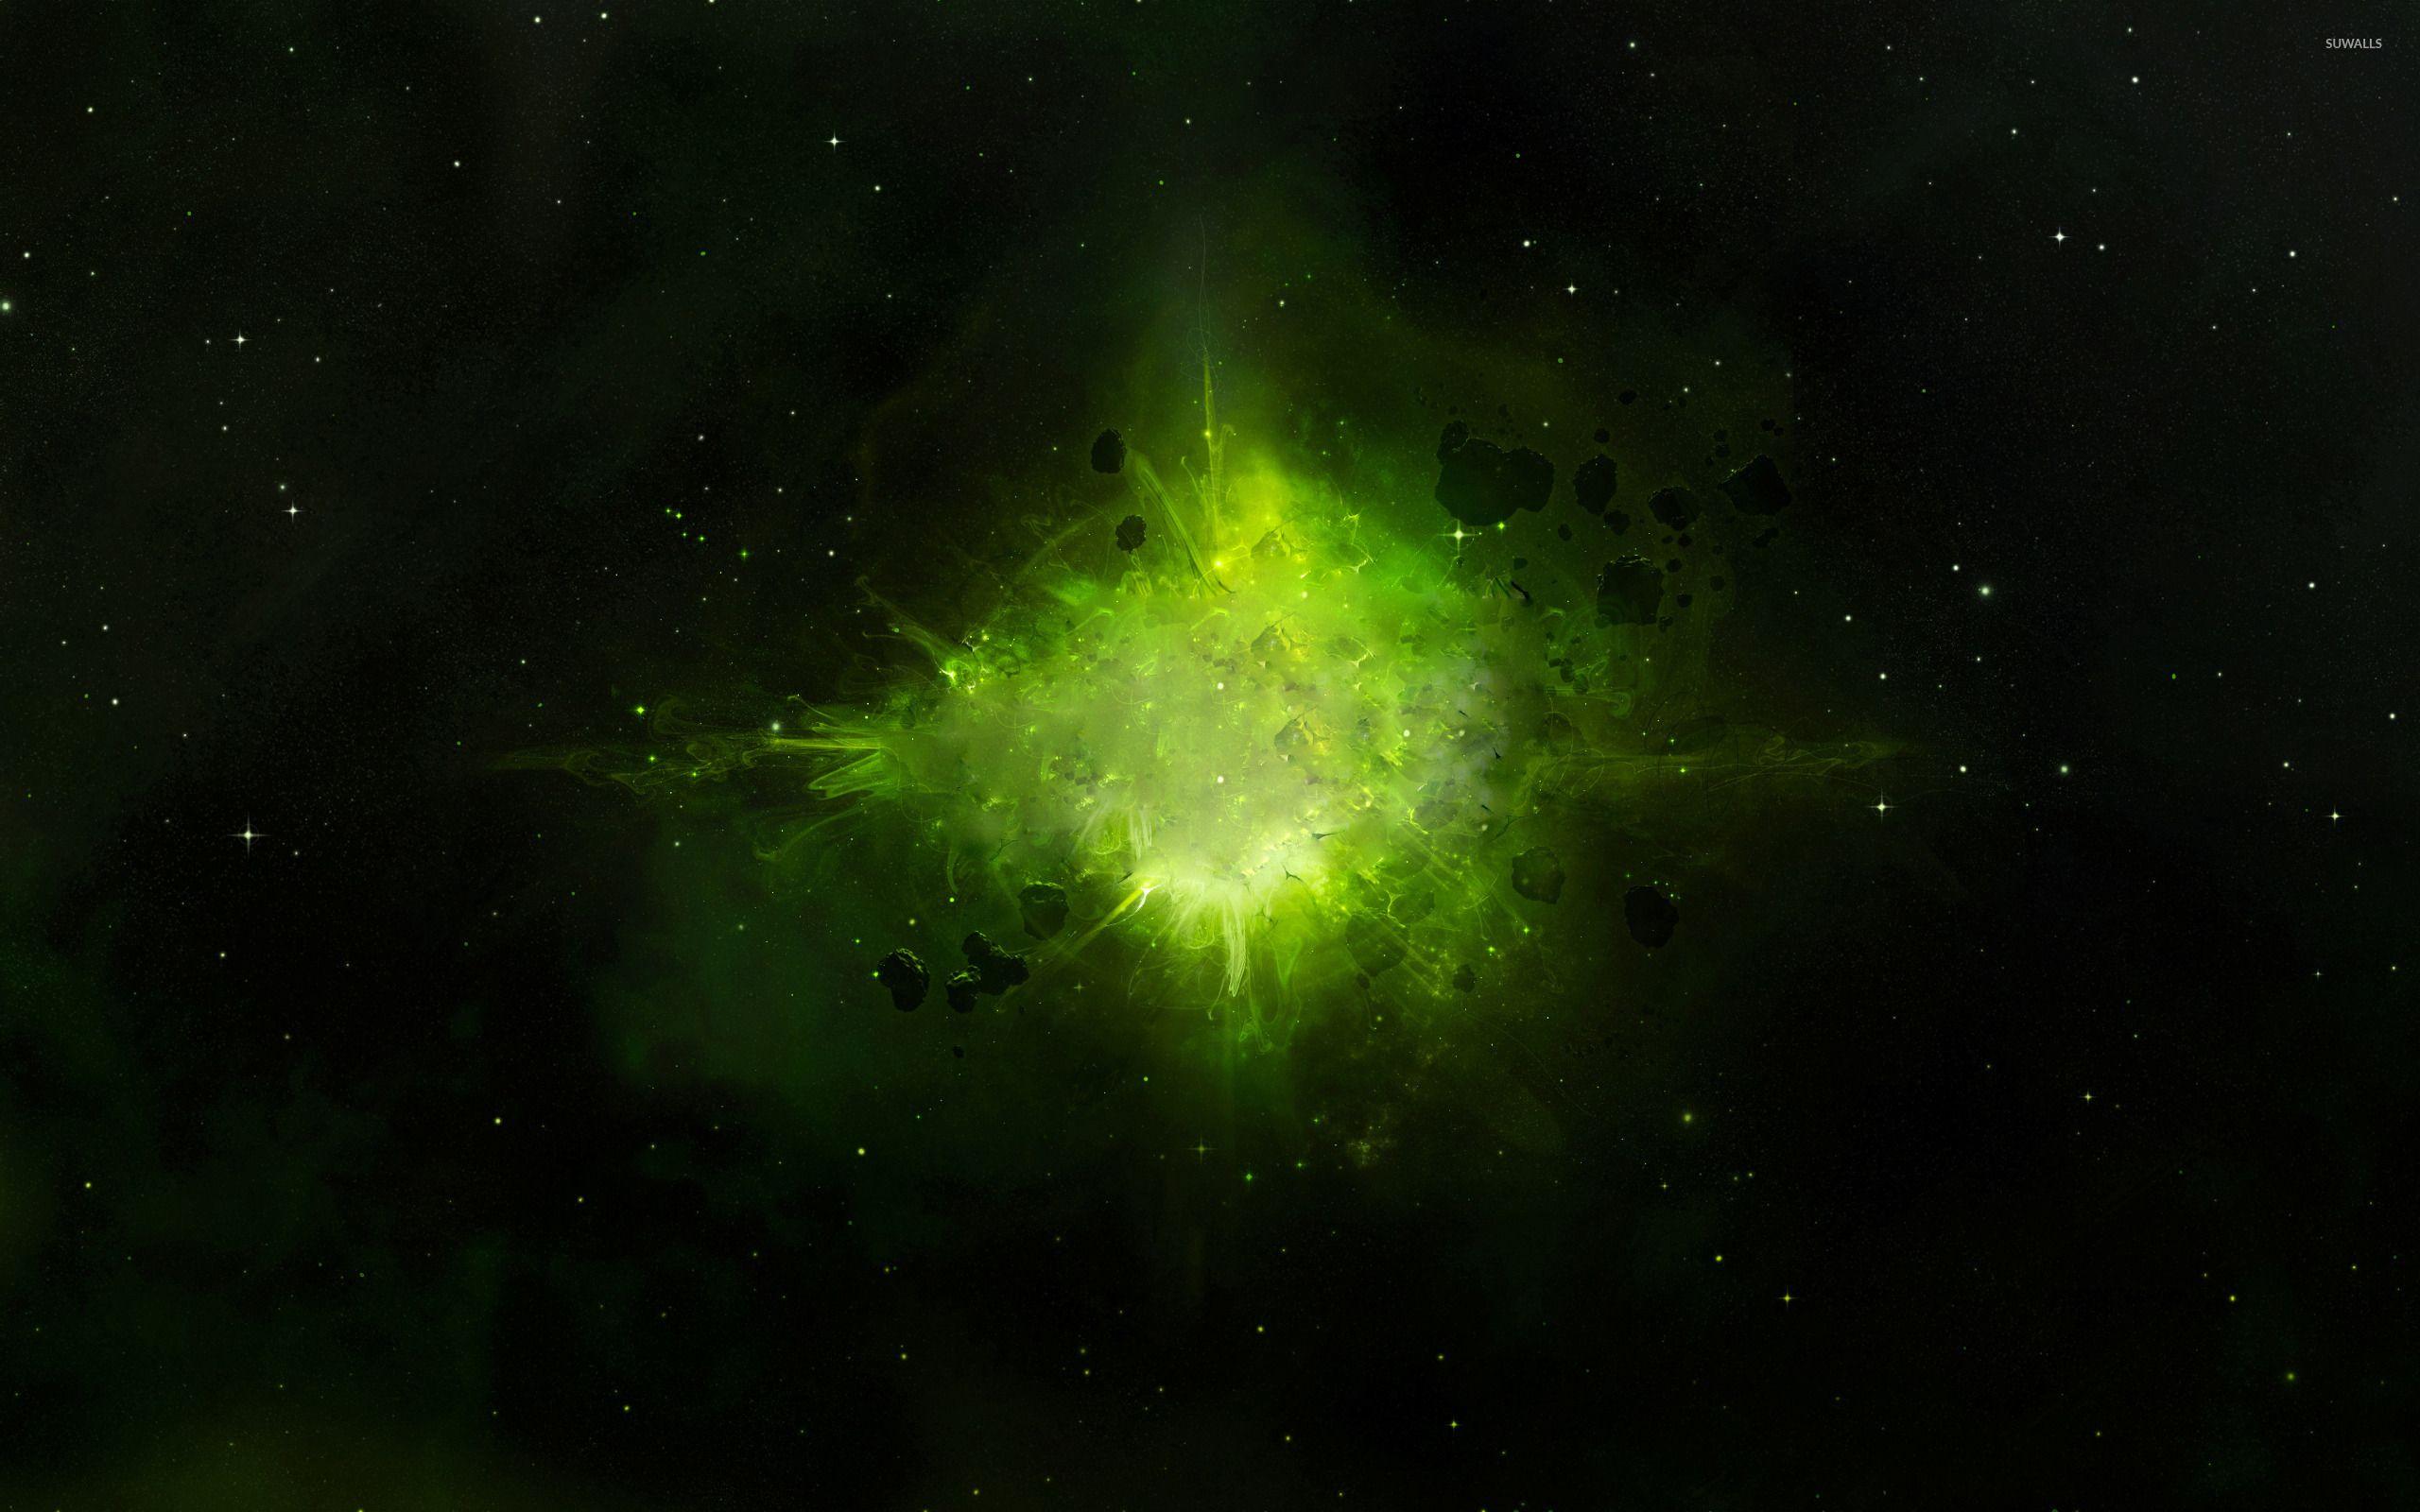 Green explosion in space wallpaper wallpaper